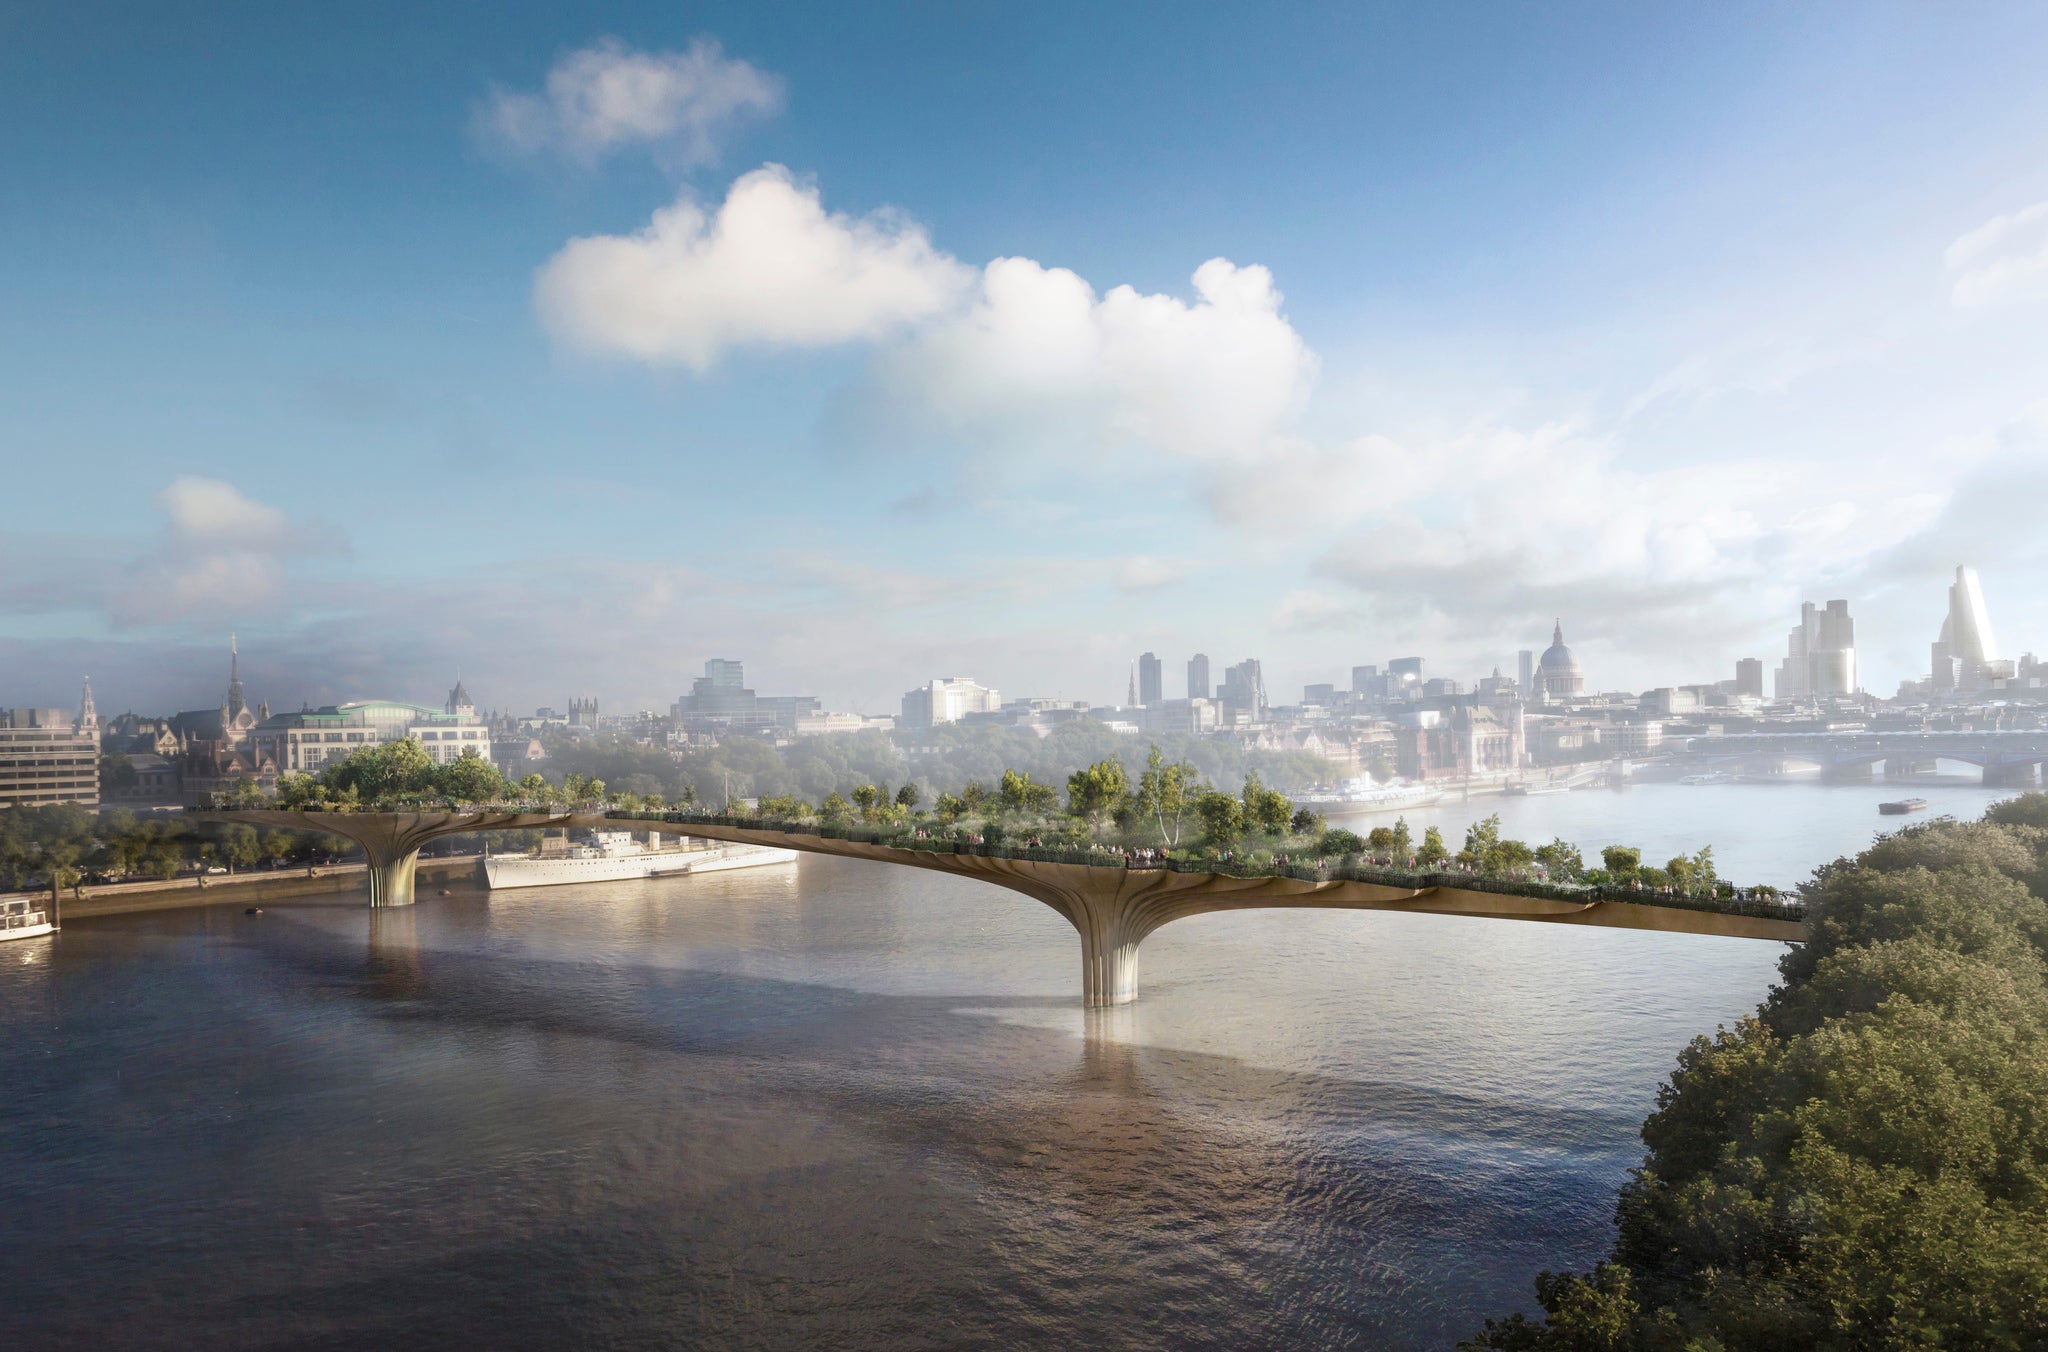 London Garden Bridge project is officially dead, say organisers